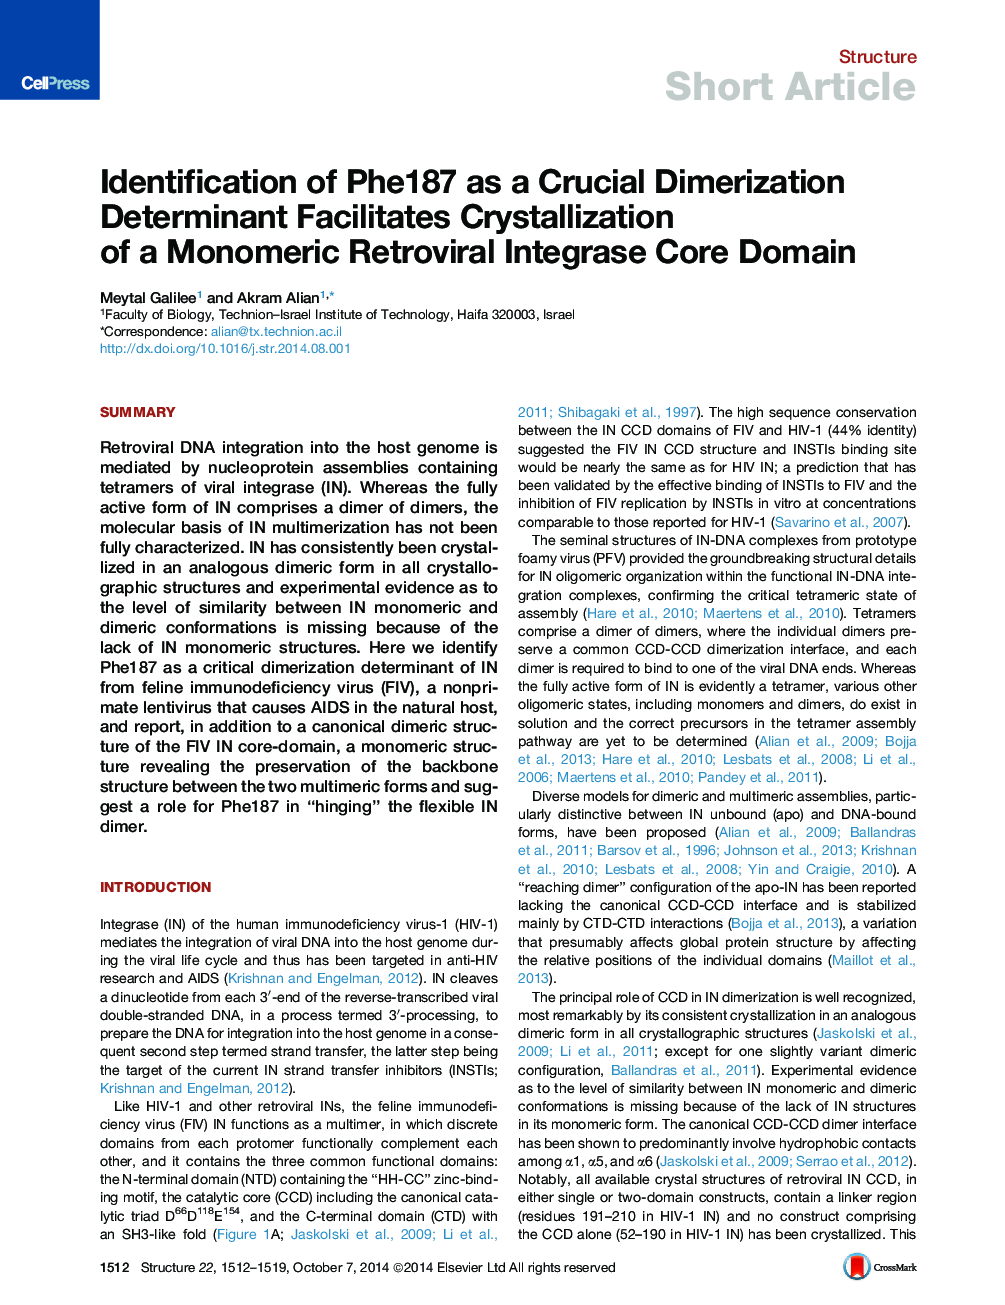 Identification of Phe187 as a Crucial Dimerization Determinant Facilitates Crystallization of a Monomeric Retroviral Integrase Core Domain